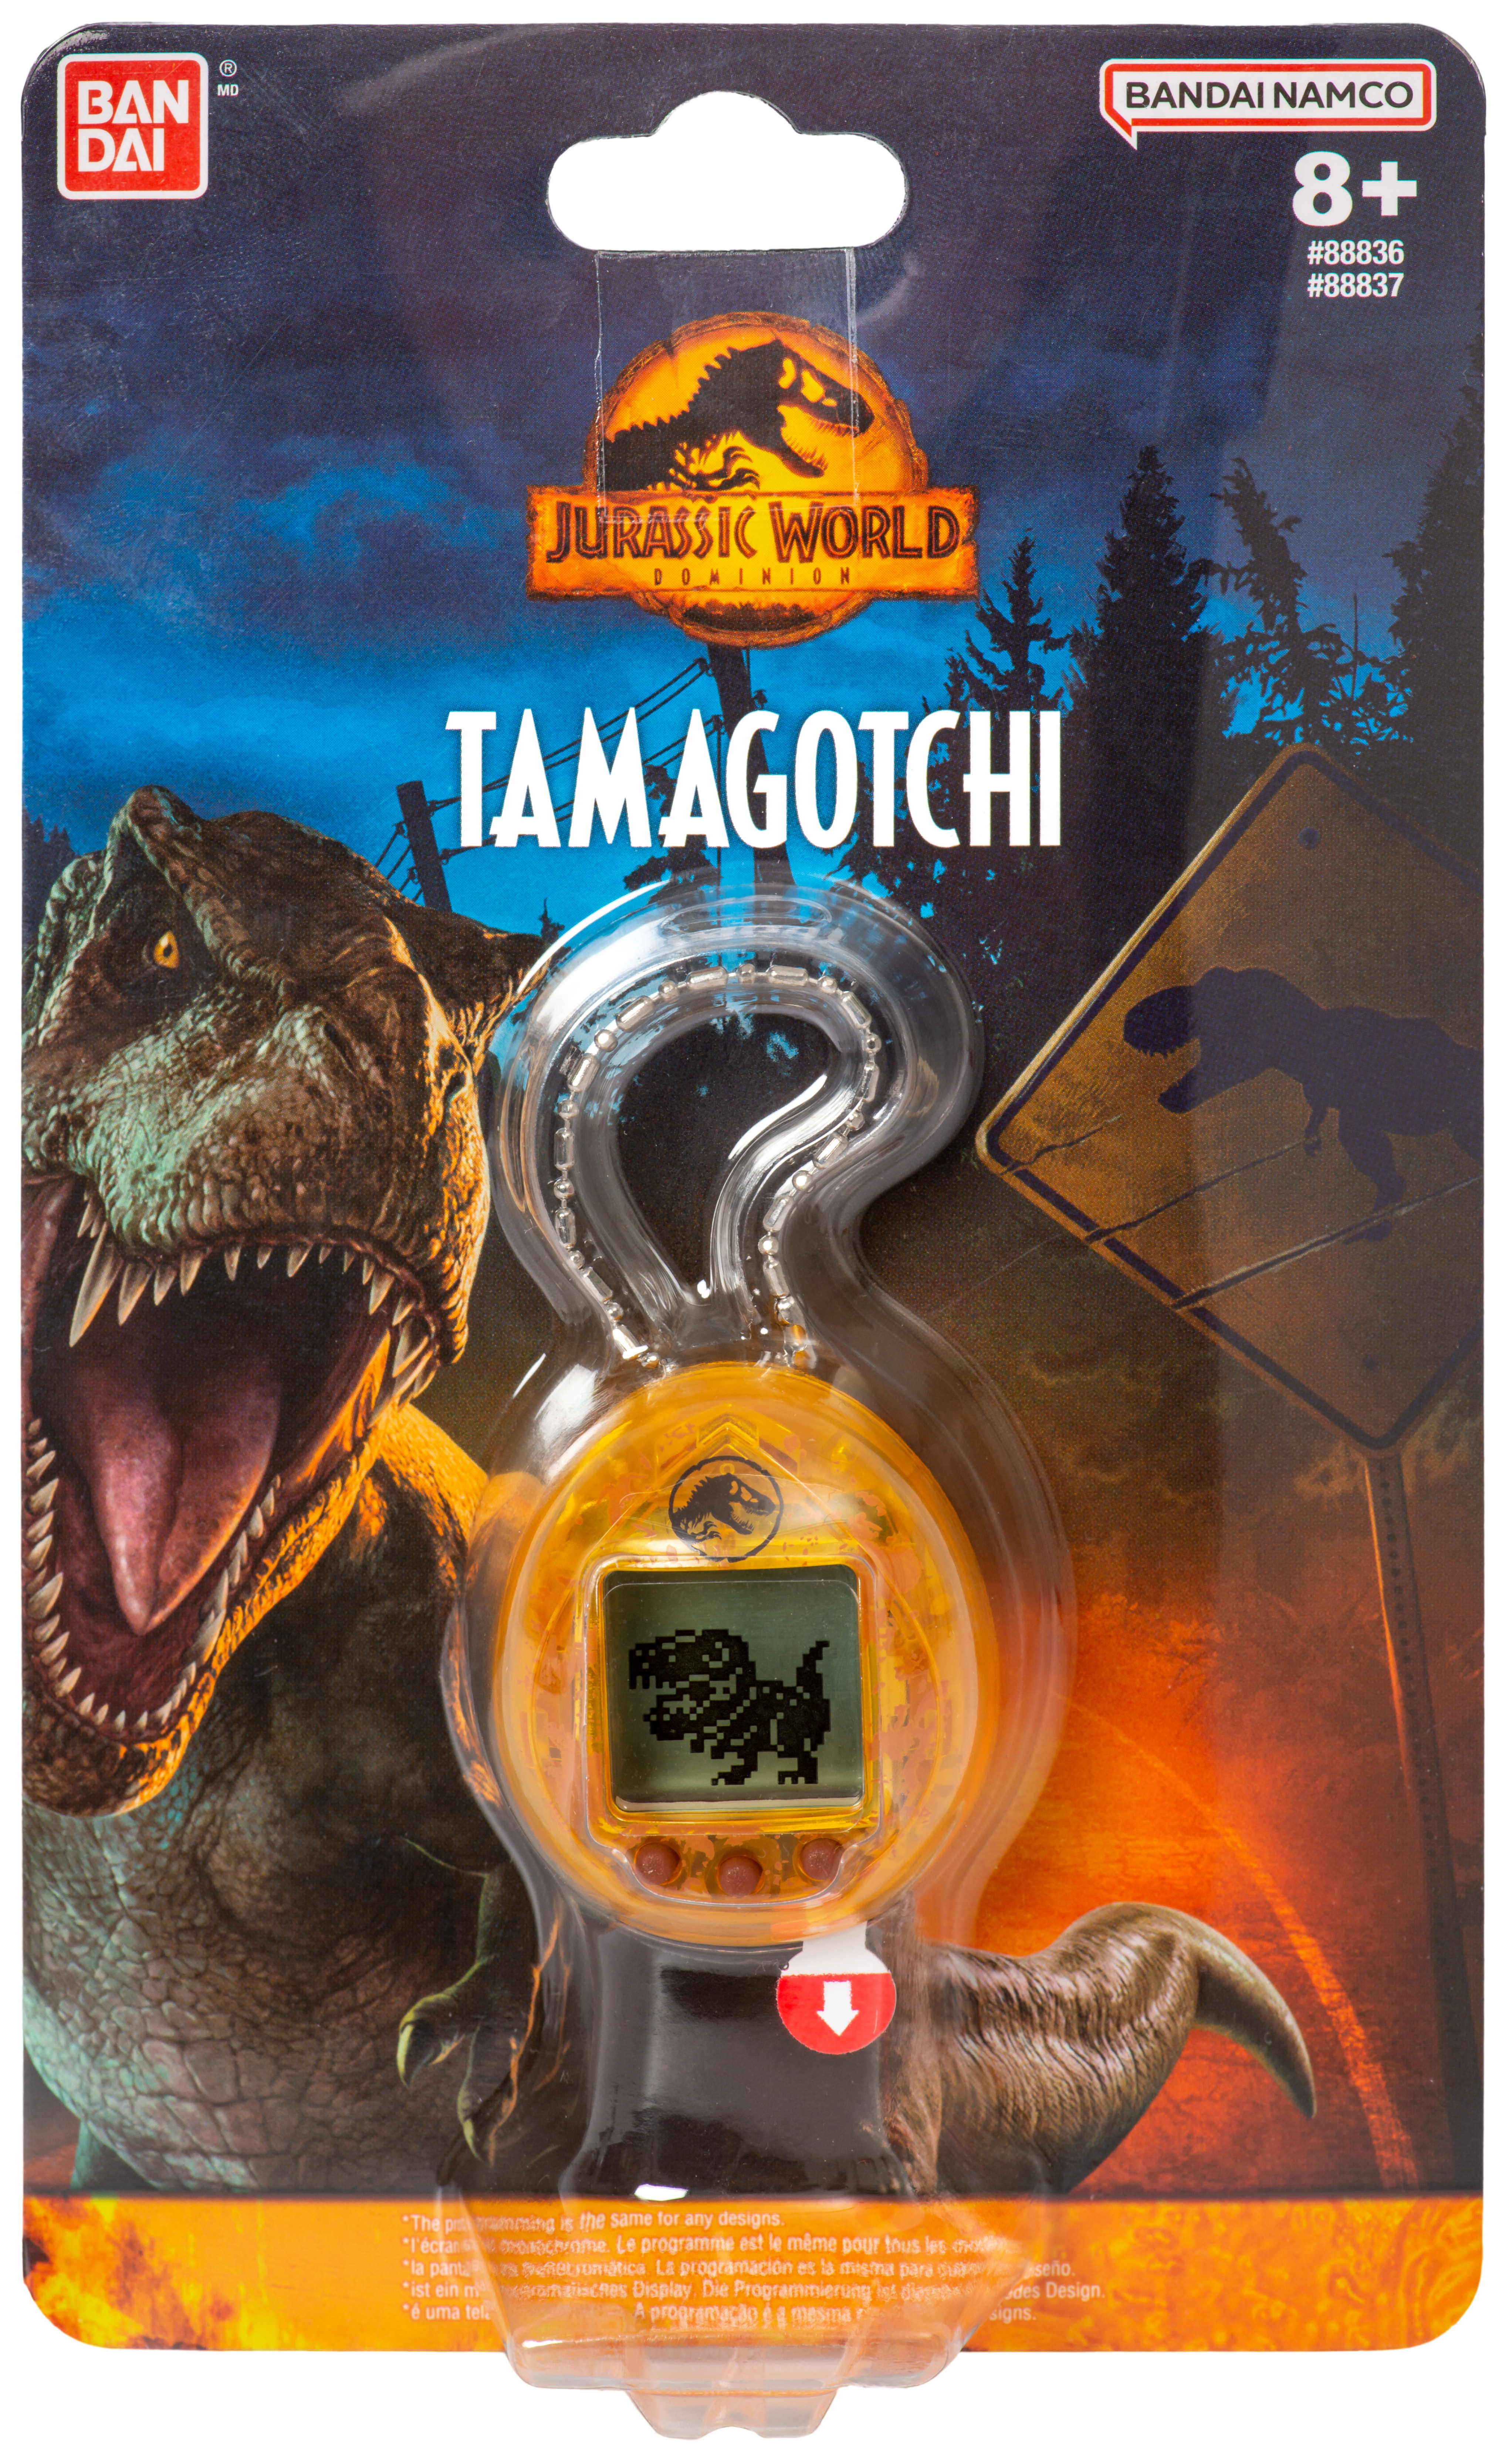 Tamagotchi Jurassic BANDAI World